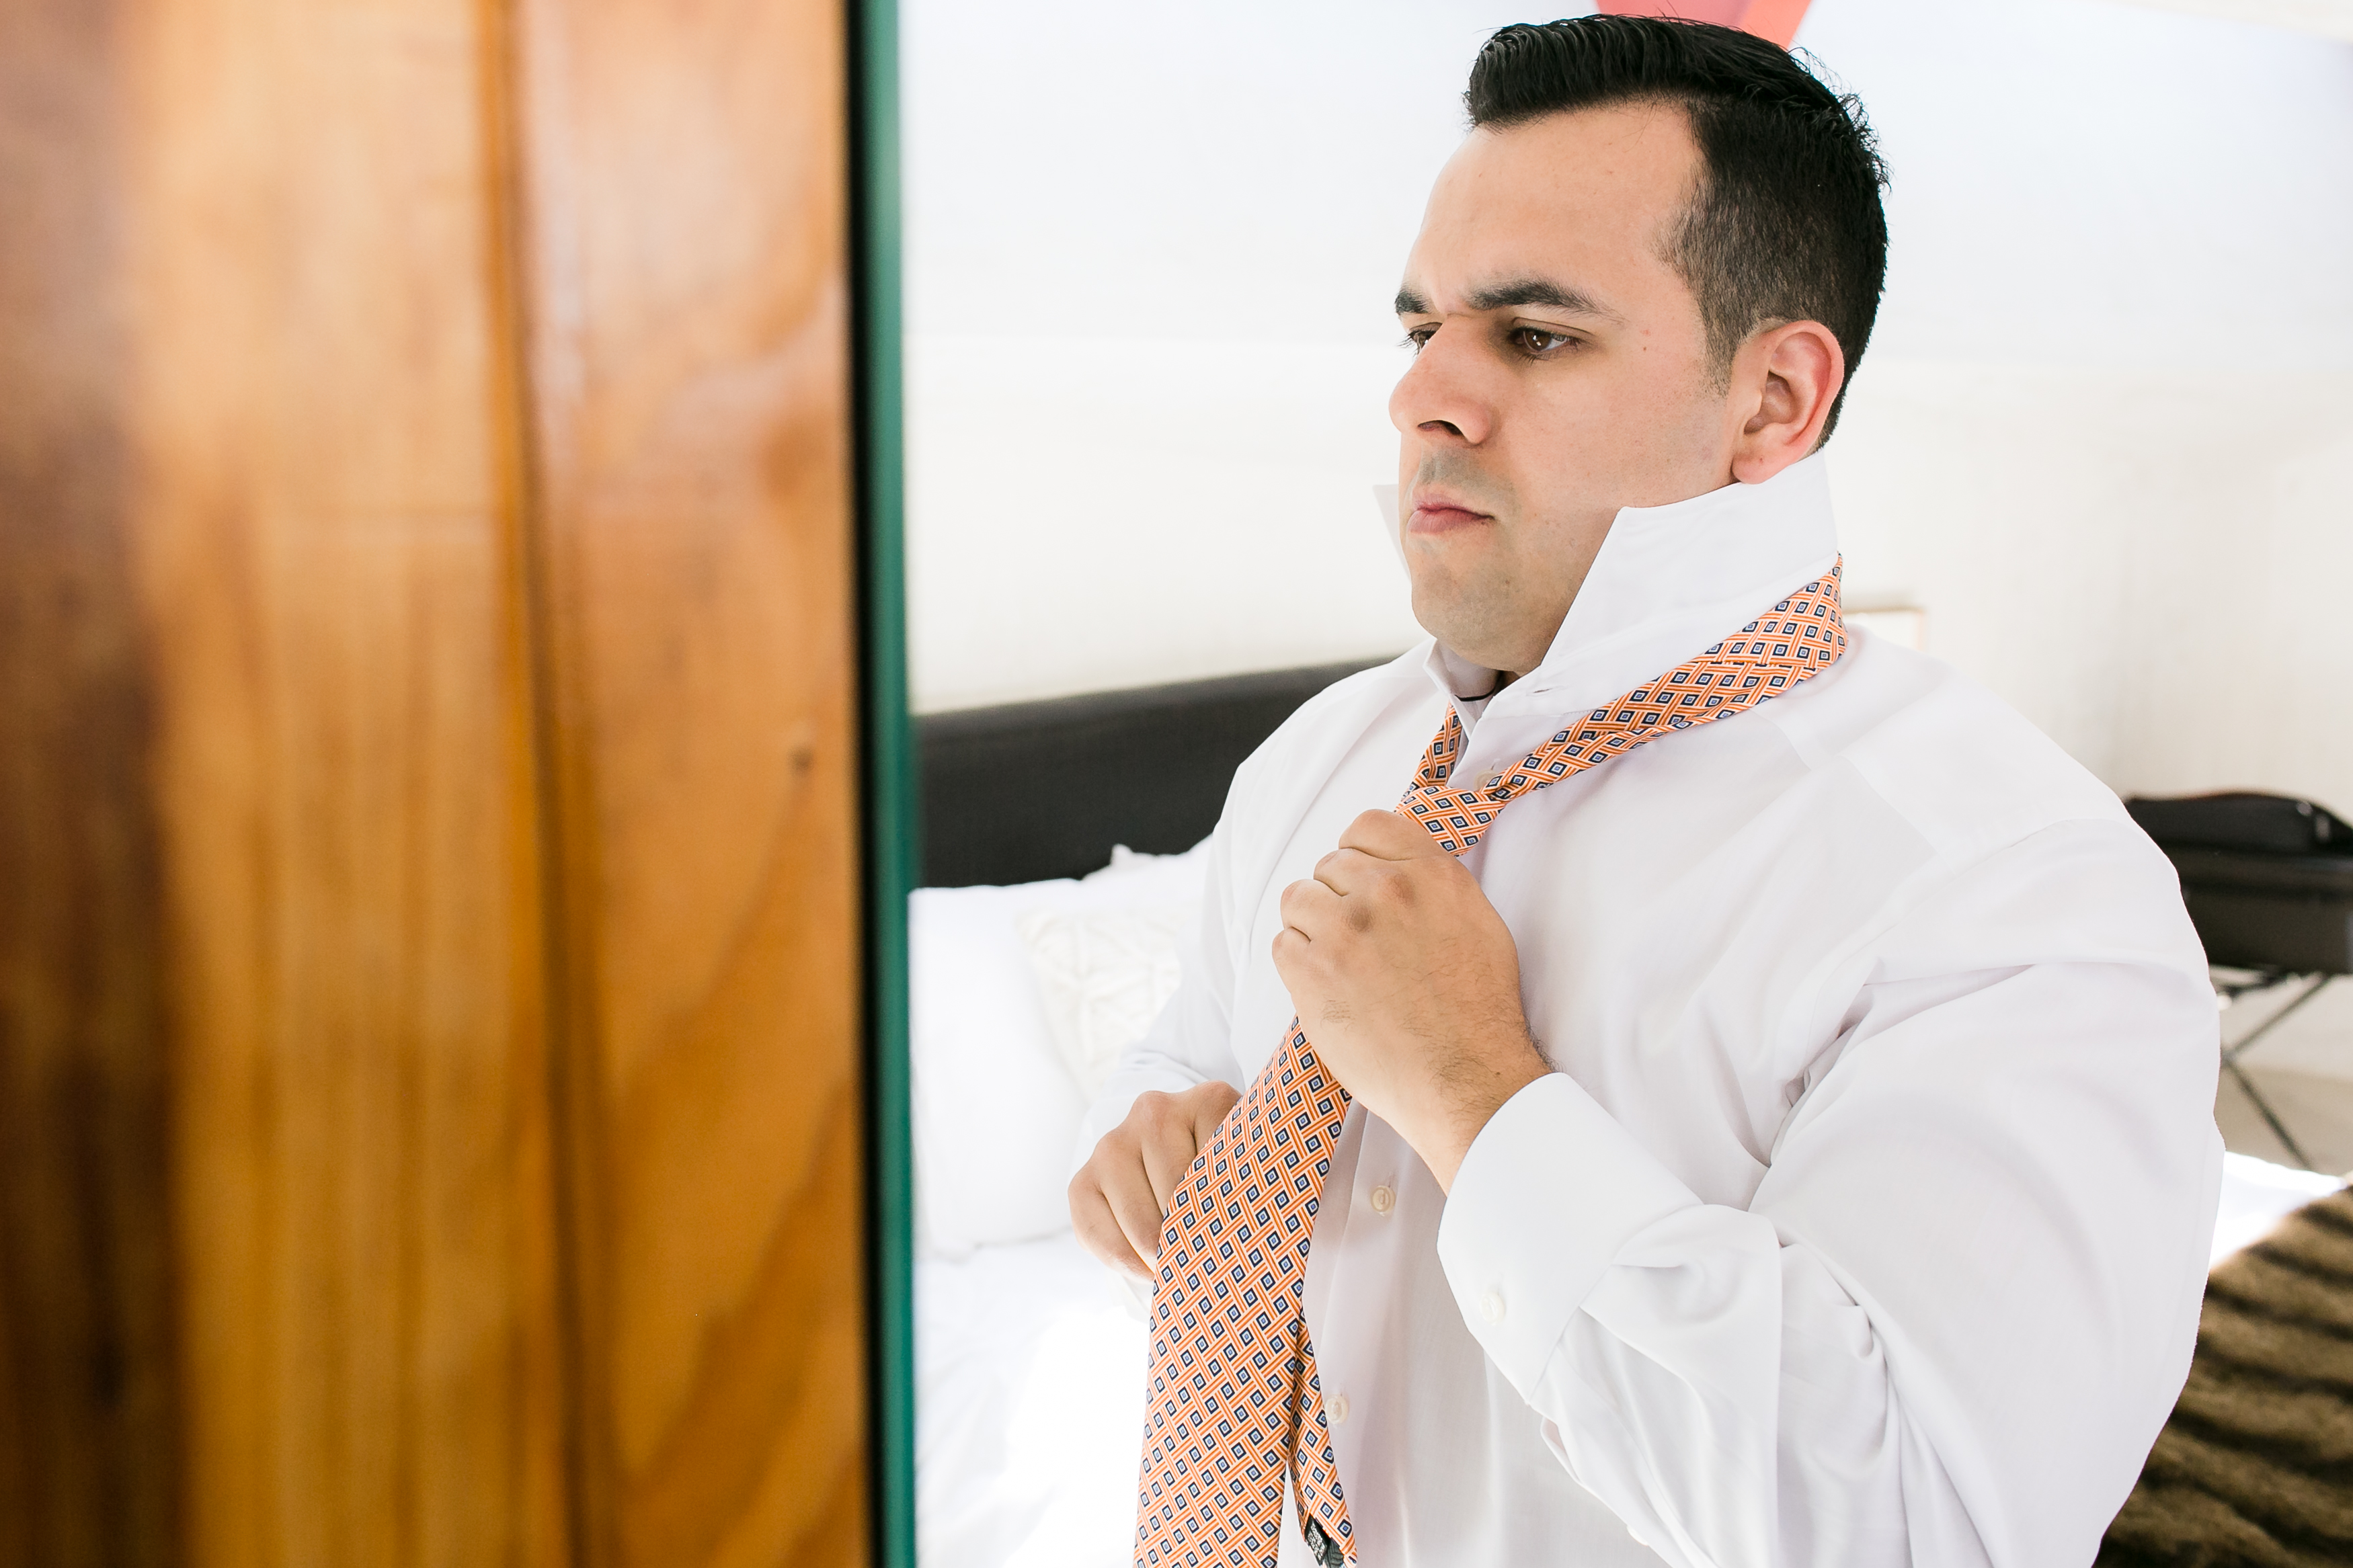 Man adjusting peach colored tie in mirror in hotel room